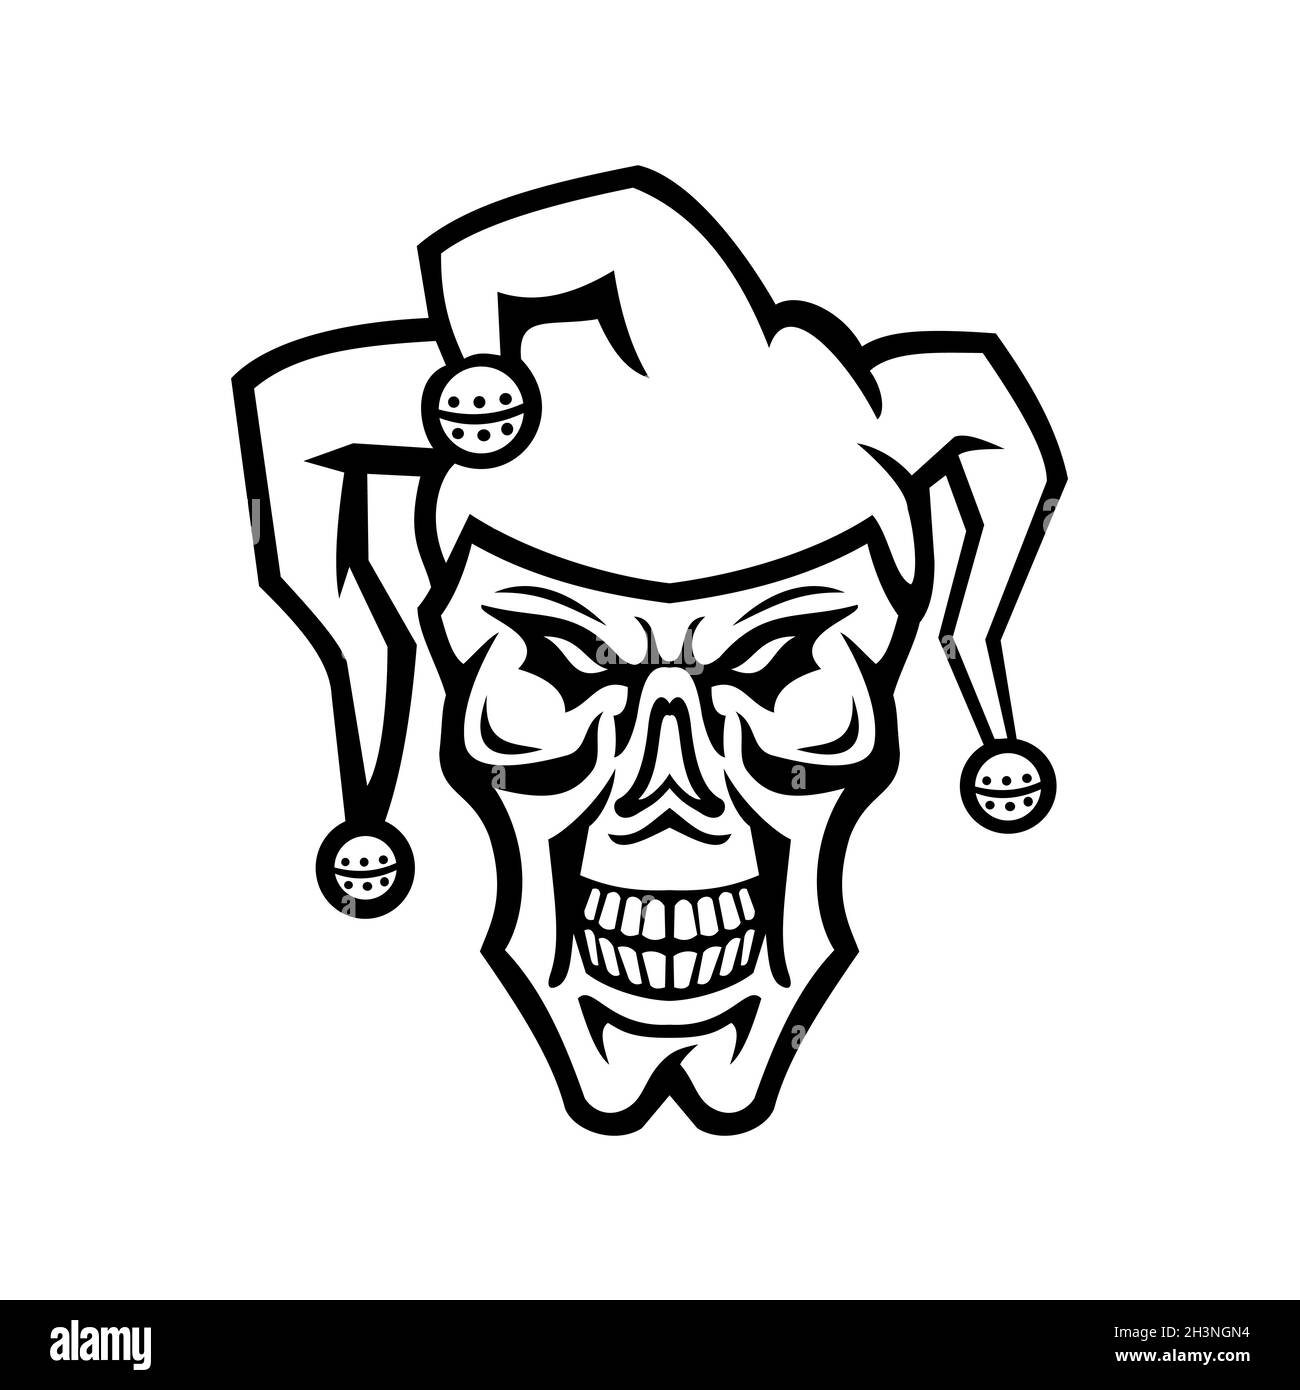 Head of a Court Jester or Joker Skull Skull Front View Mascot Black and White Stock Photo